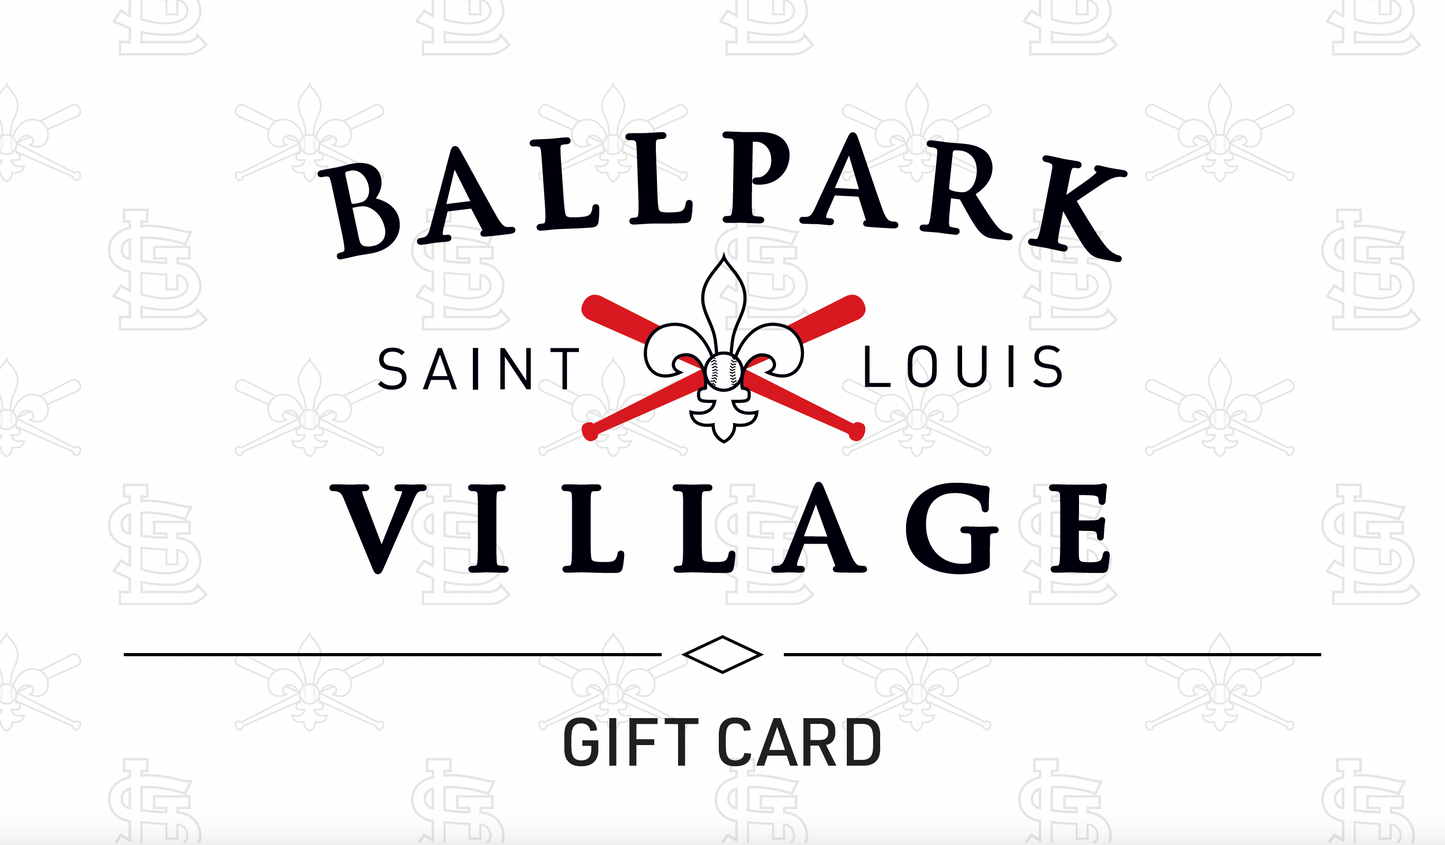 Ballpark Village Gift Card